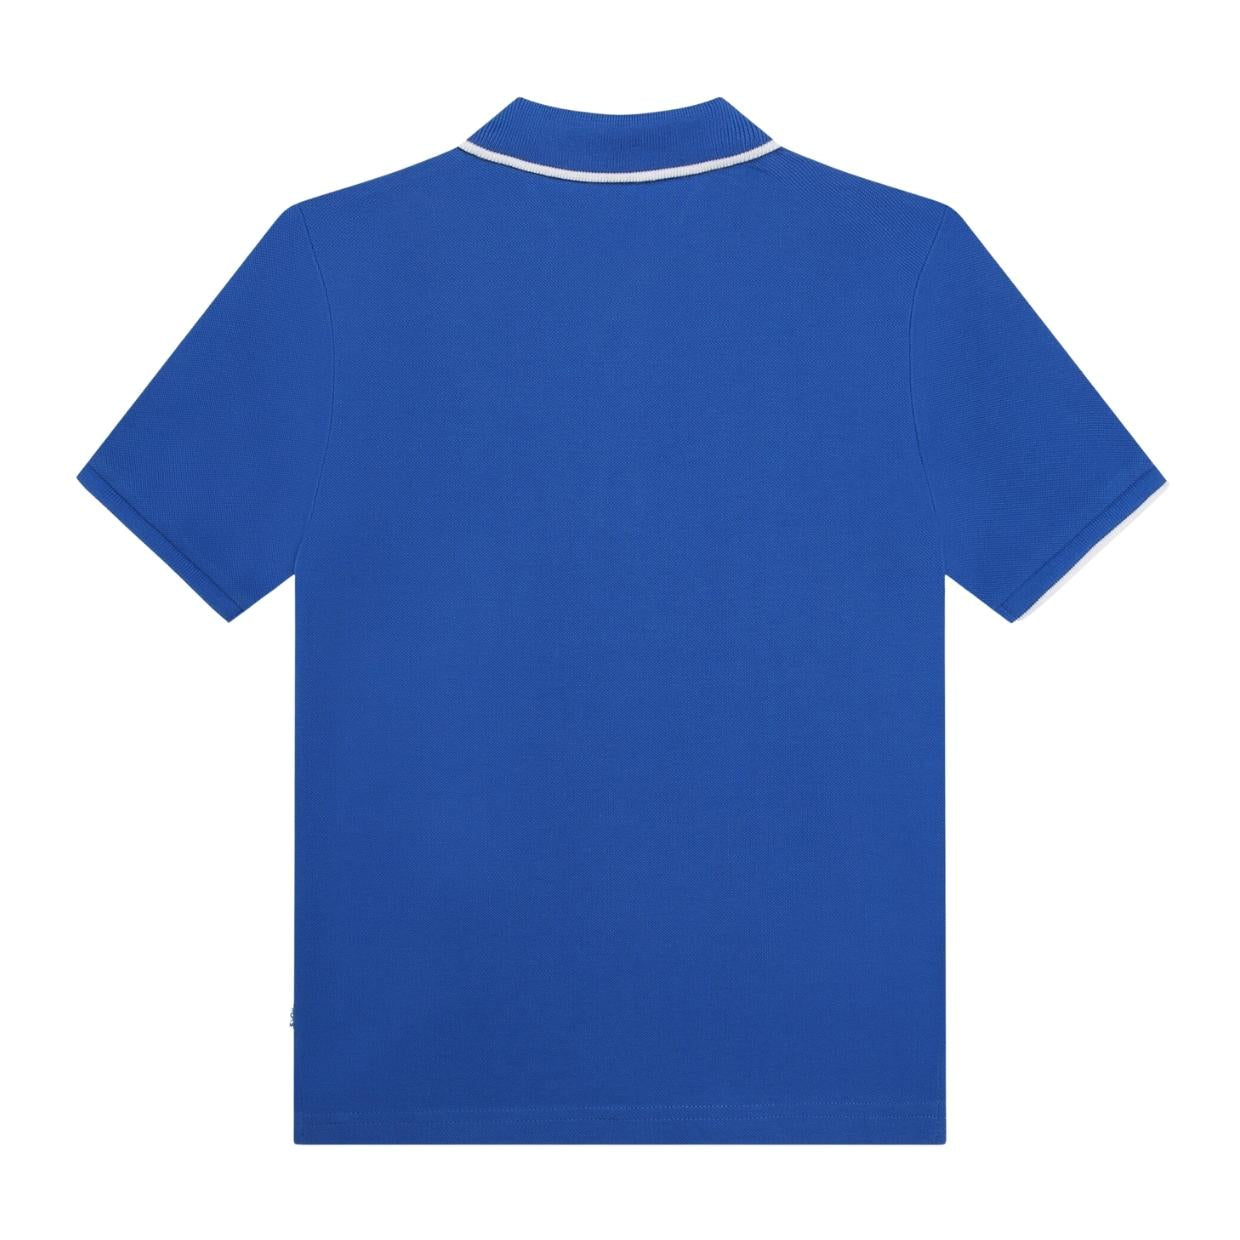 BOSS Kids Print Logo Short Sleeve Royal Blue Polo Shirt